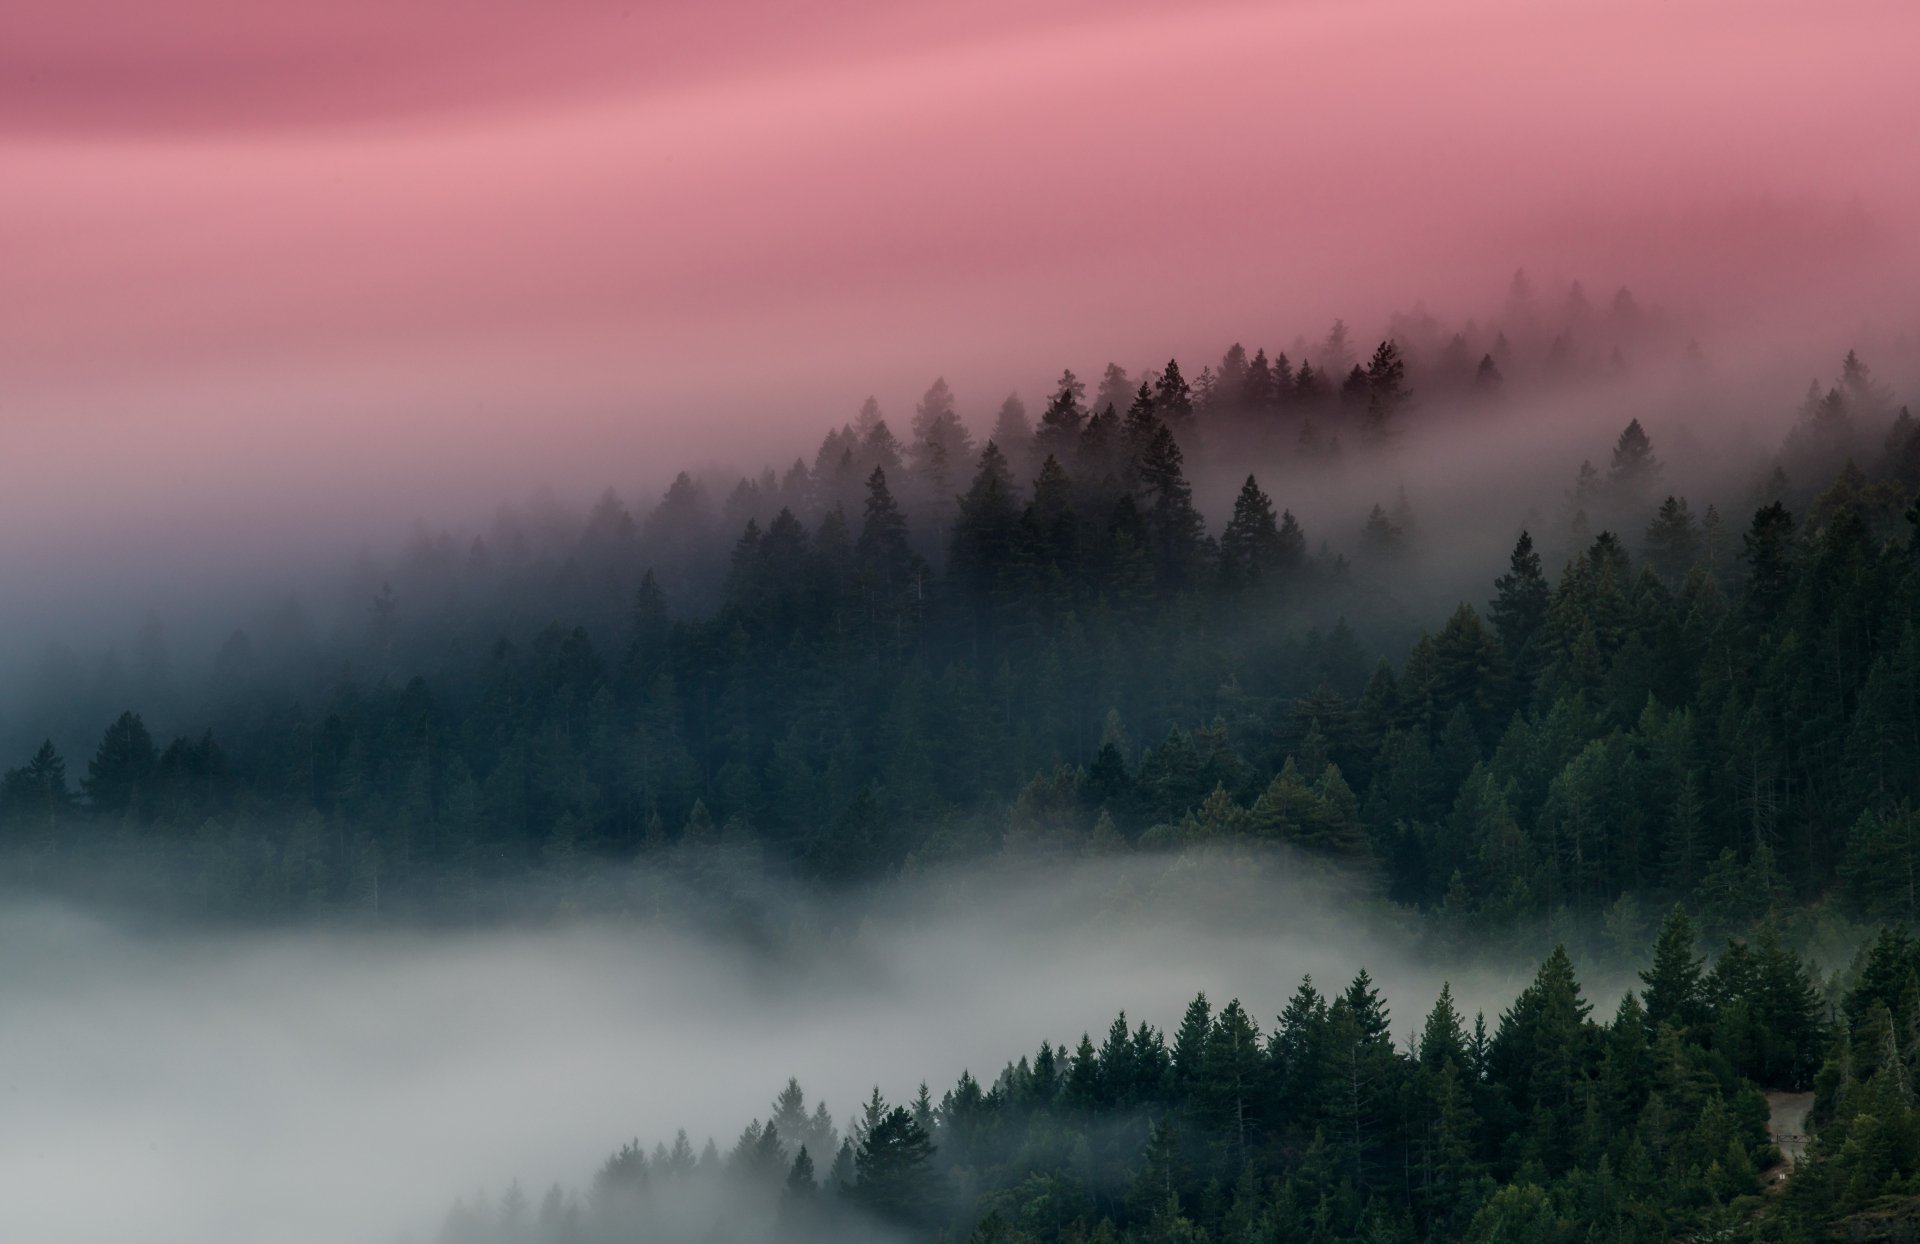 The foggy forest. by Kurt Bartolome